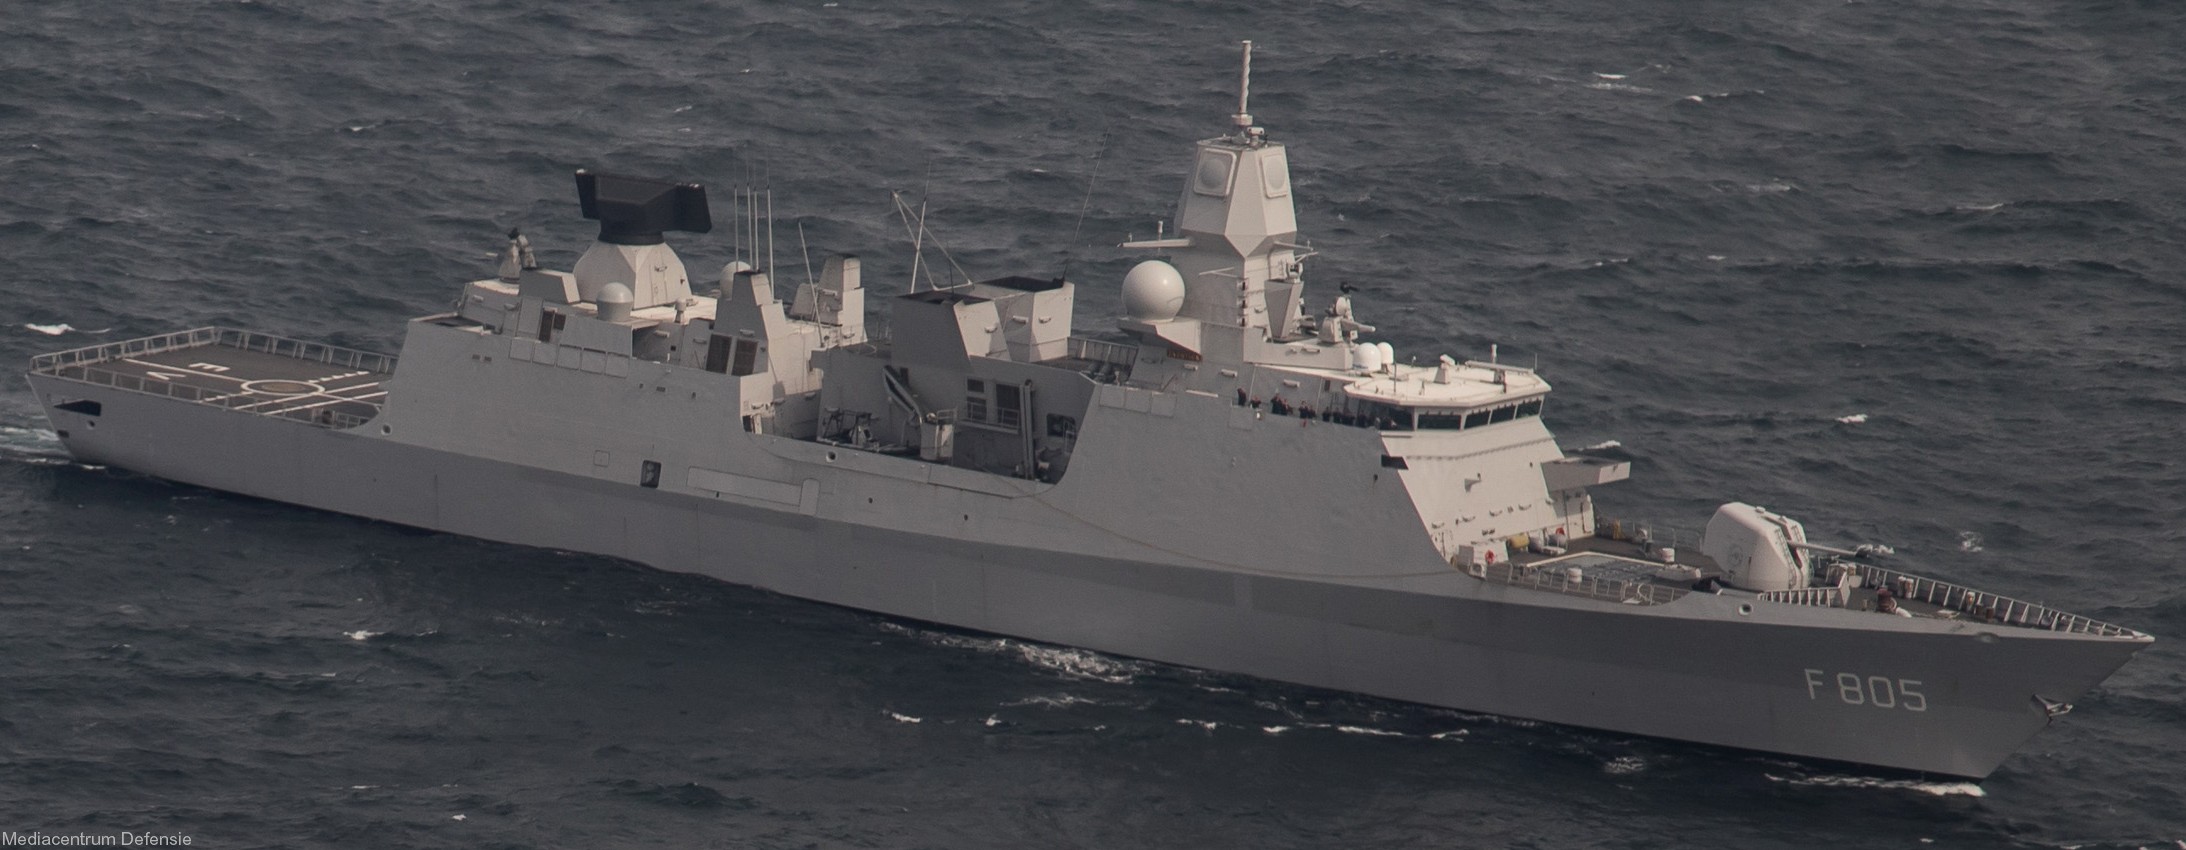 f-805 hnlms evertsen guided missile frigate ffg lcf royal netherlands navy 12